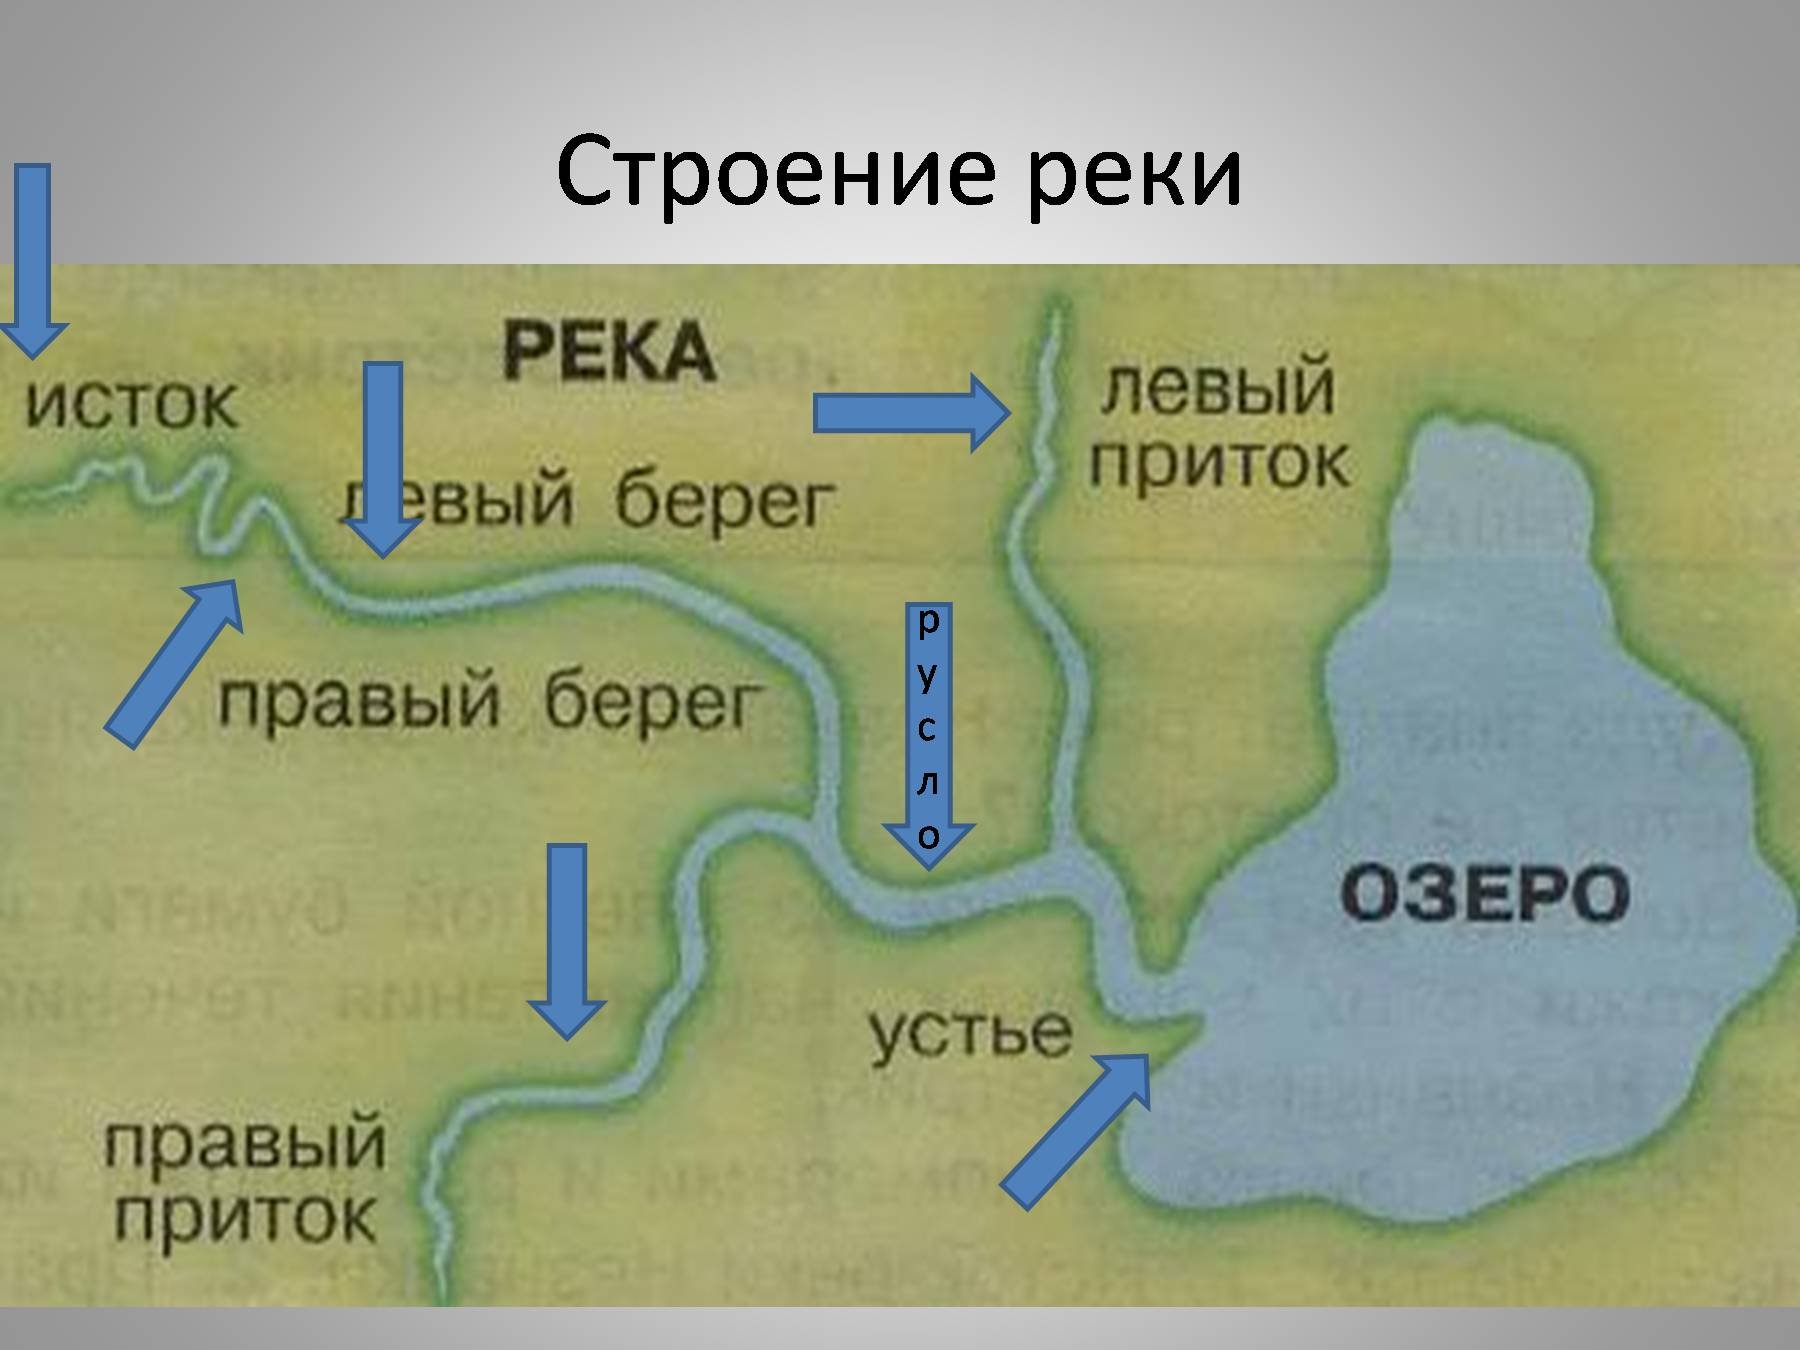 Реки россии исток и устье карта. Строение реки. Структура реки. Схема реки. Части реки схема.